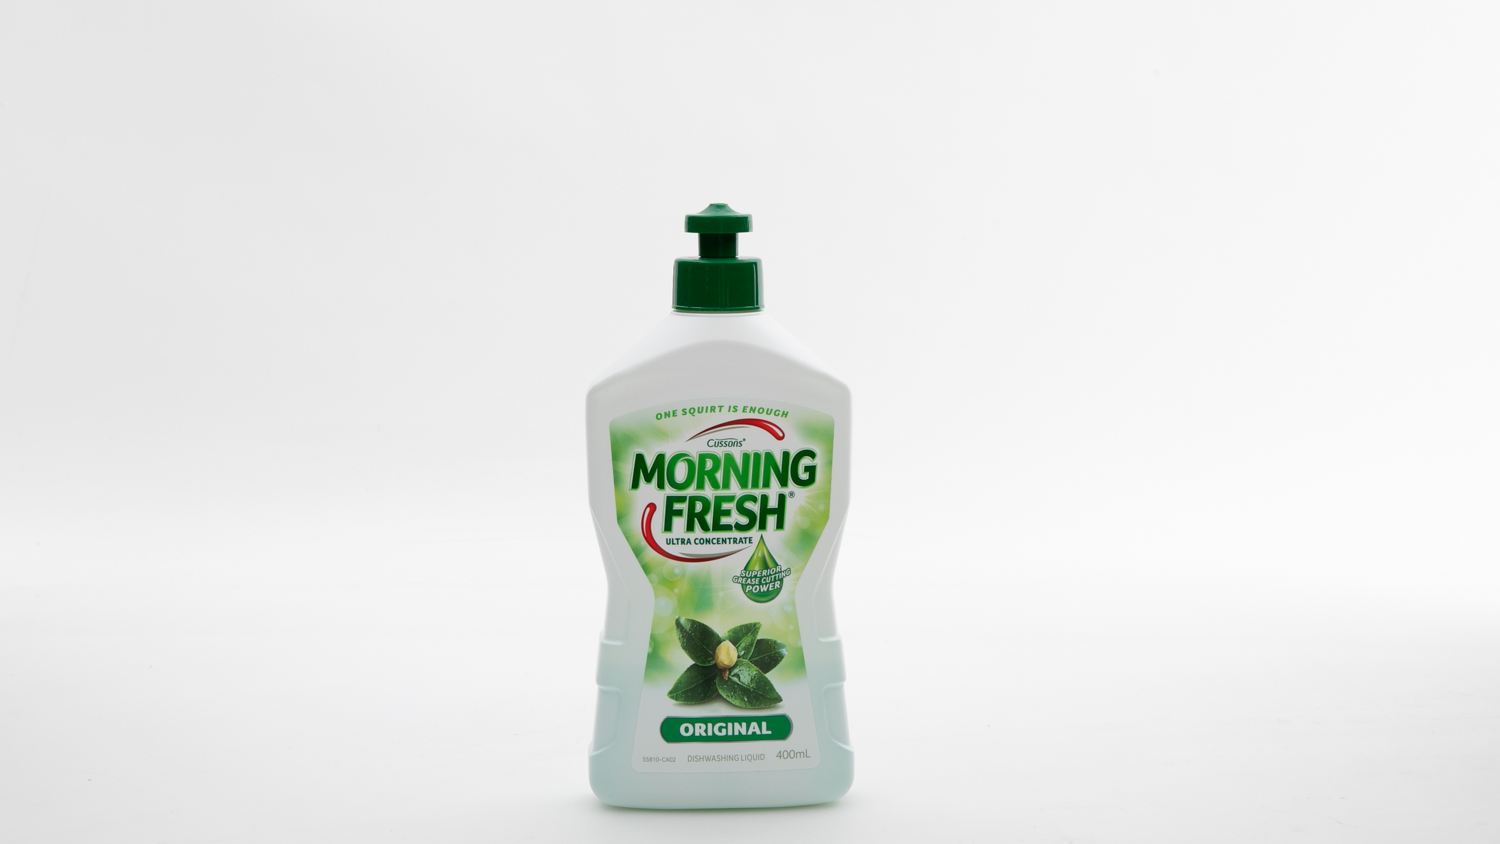 Morning Fresh Ultra Concentrate Original Dishwashing Liquid carousel image